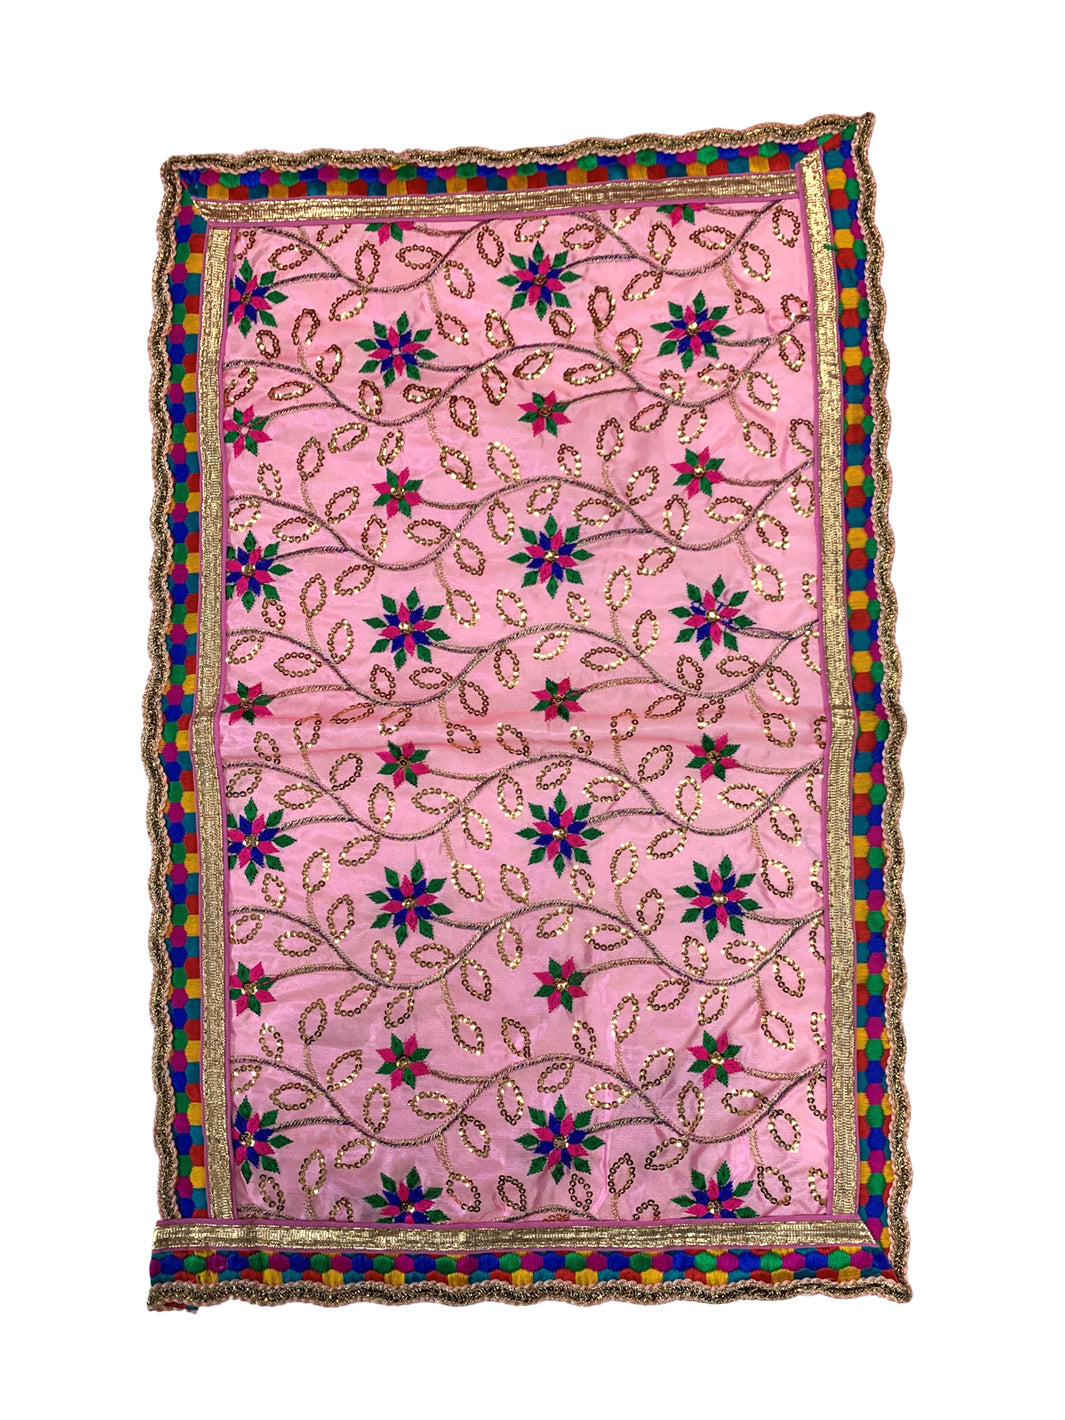 Embroidered Mata Chunri 34cm x 26cm - Roop Darshan